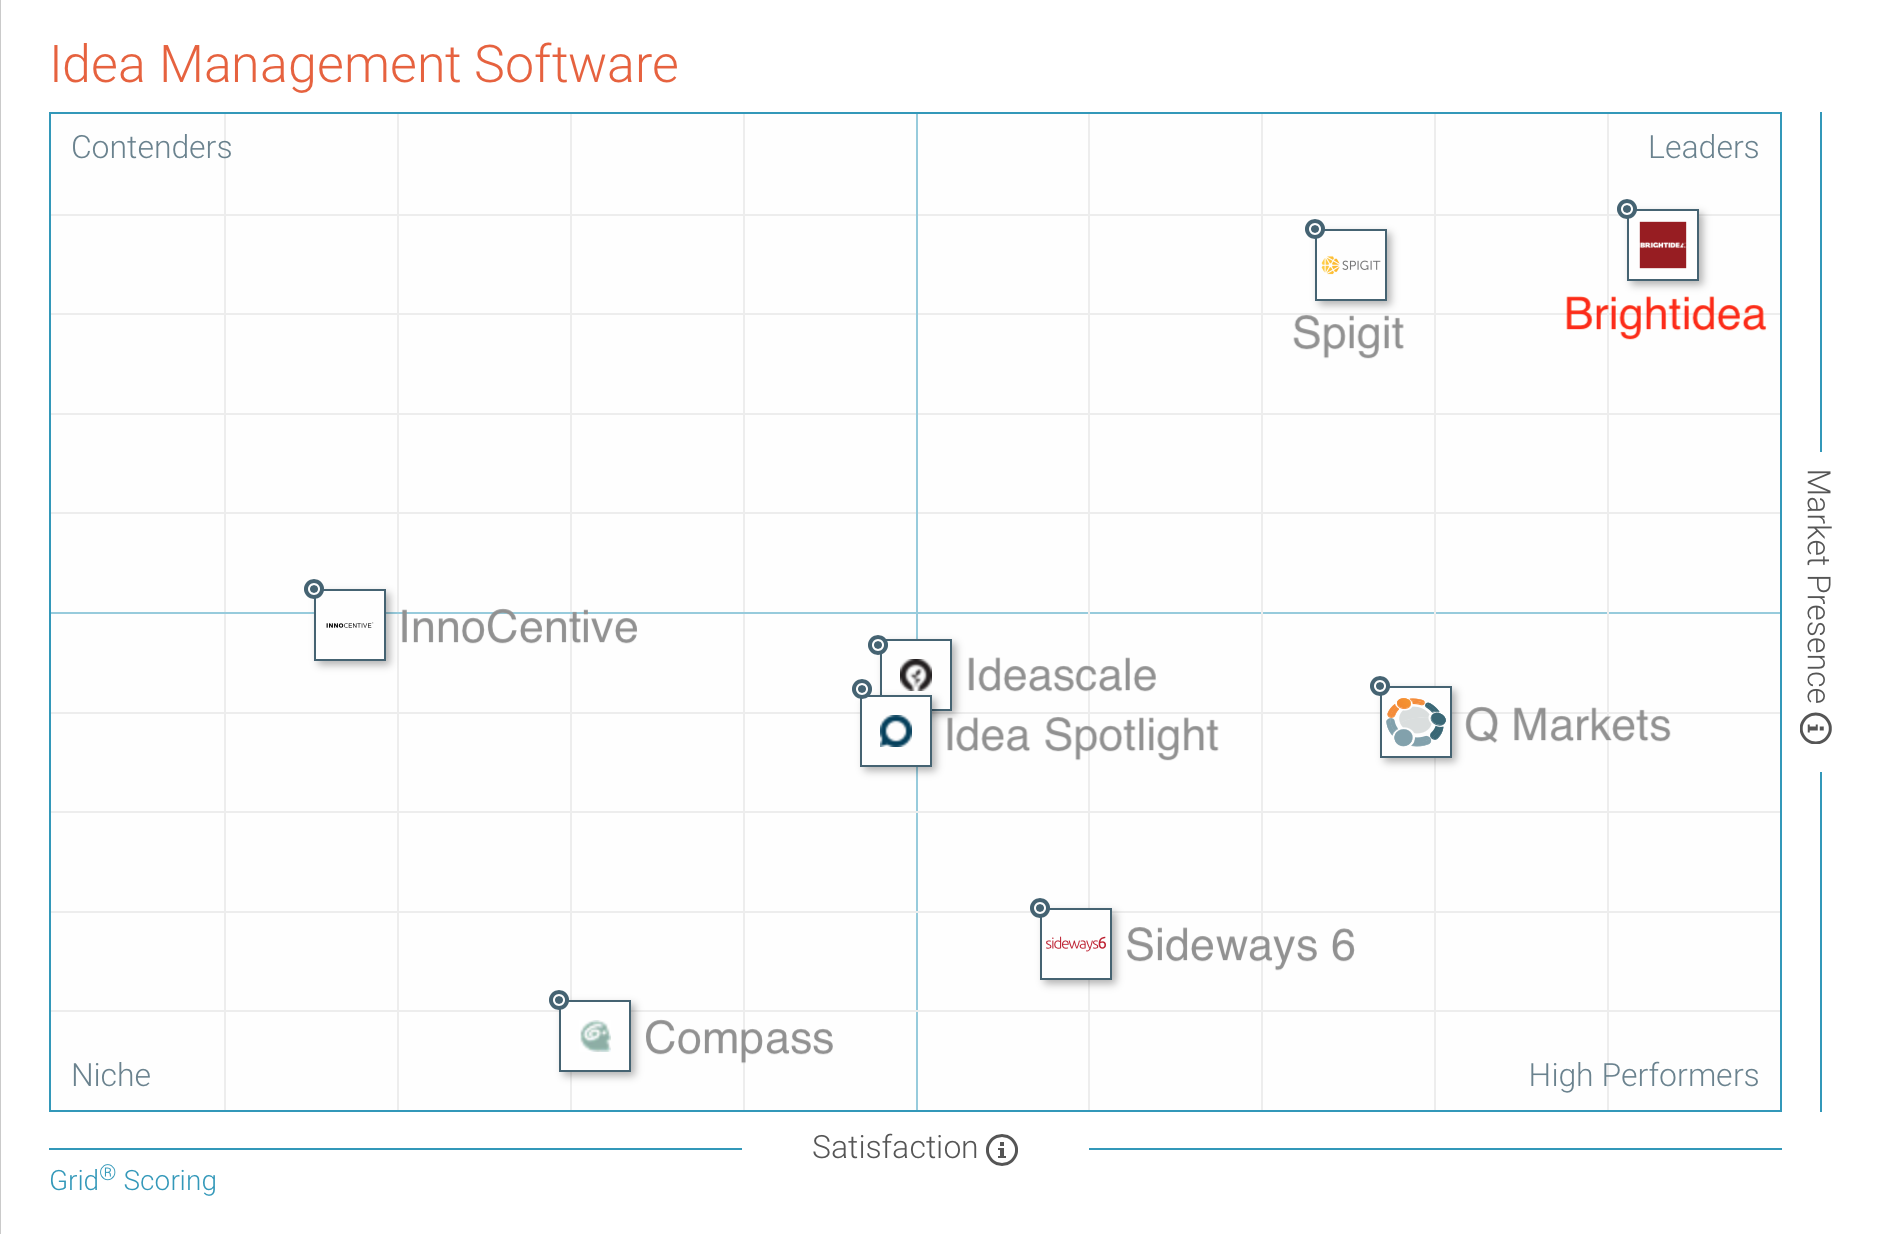 Brightidea G2Crowd Innovation Management Software Grid